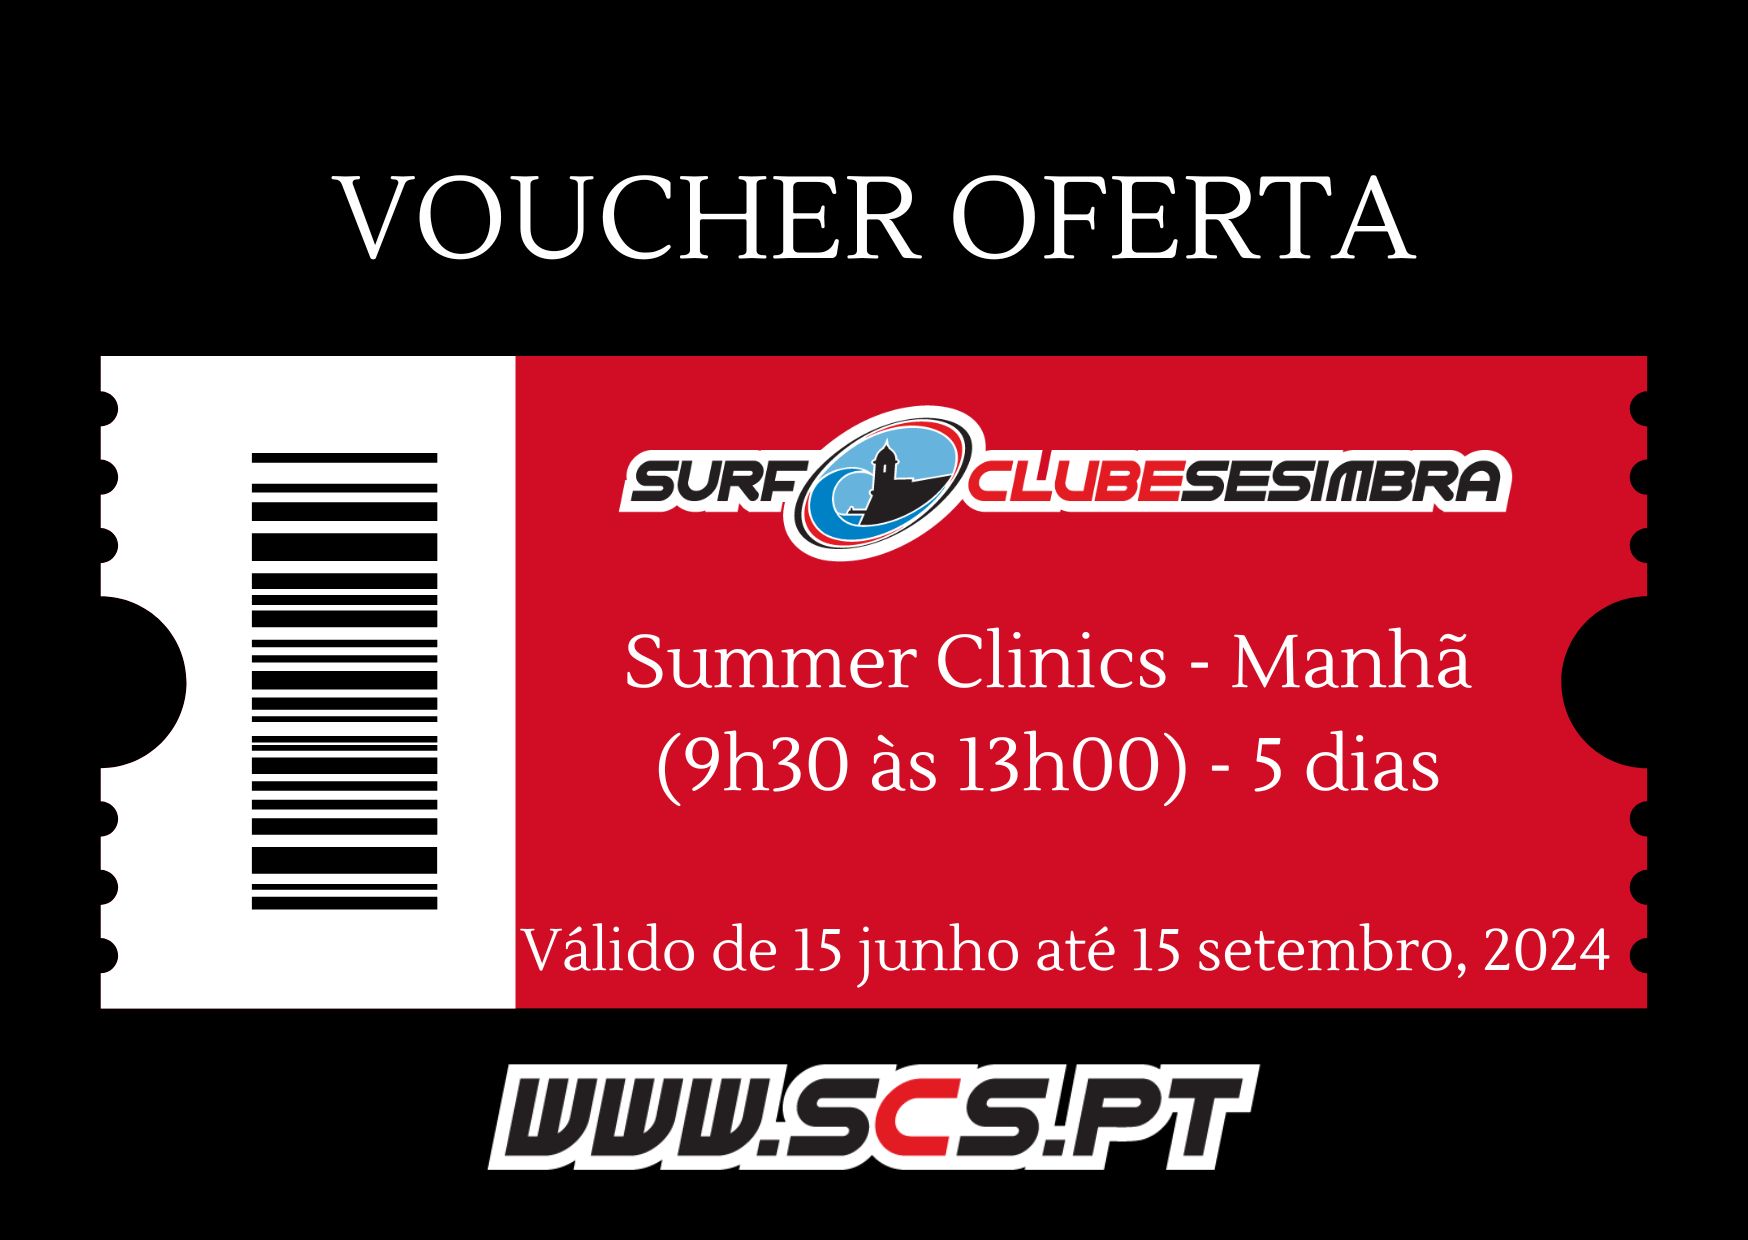 Voucher Oferta Summer Clinics - Manhã (9h30 às 13h00) - 5 dias